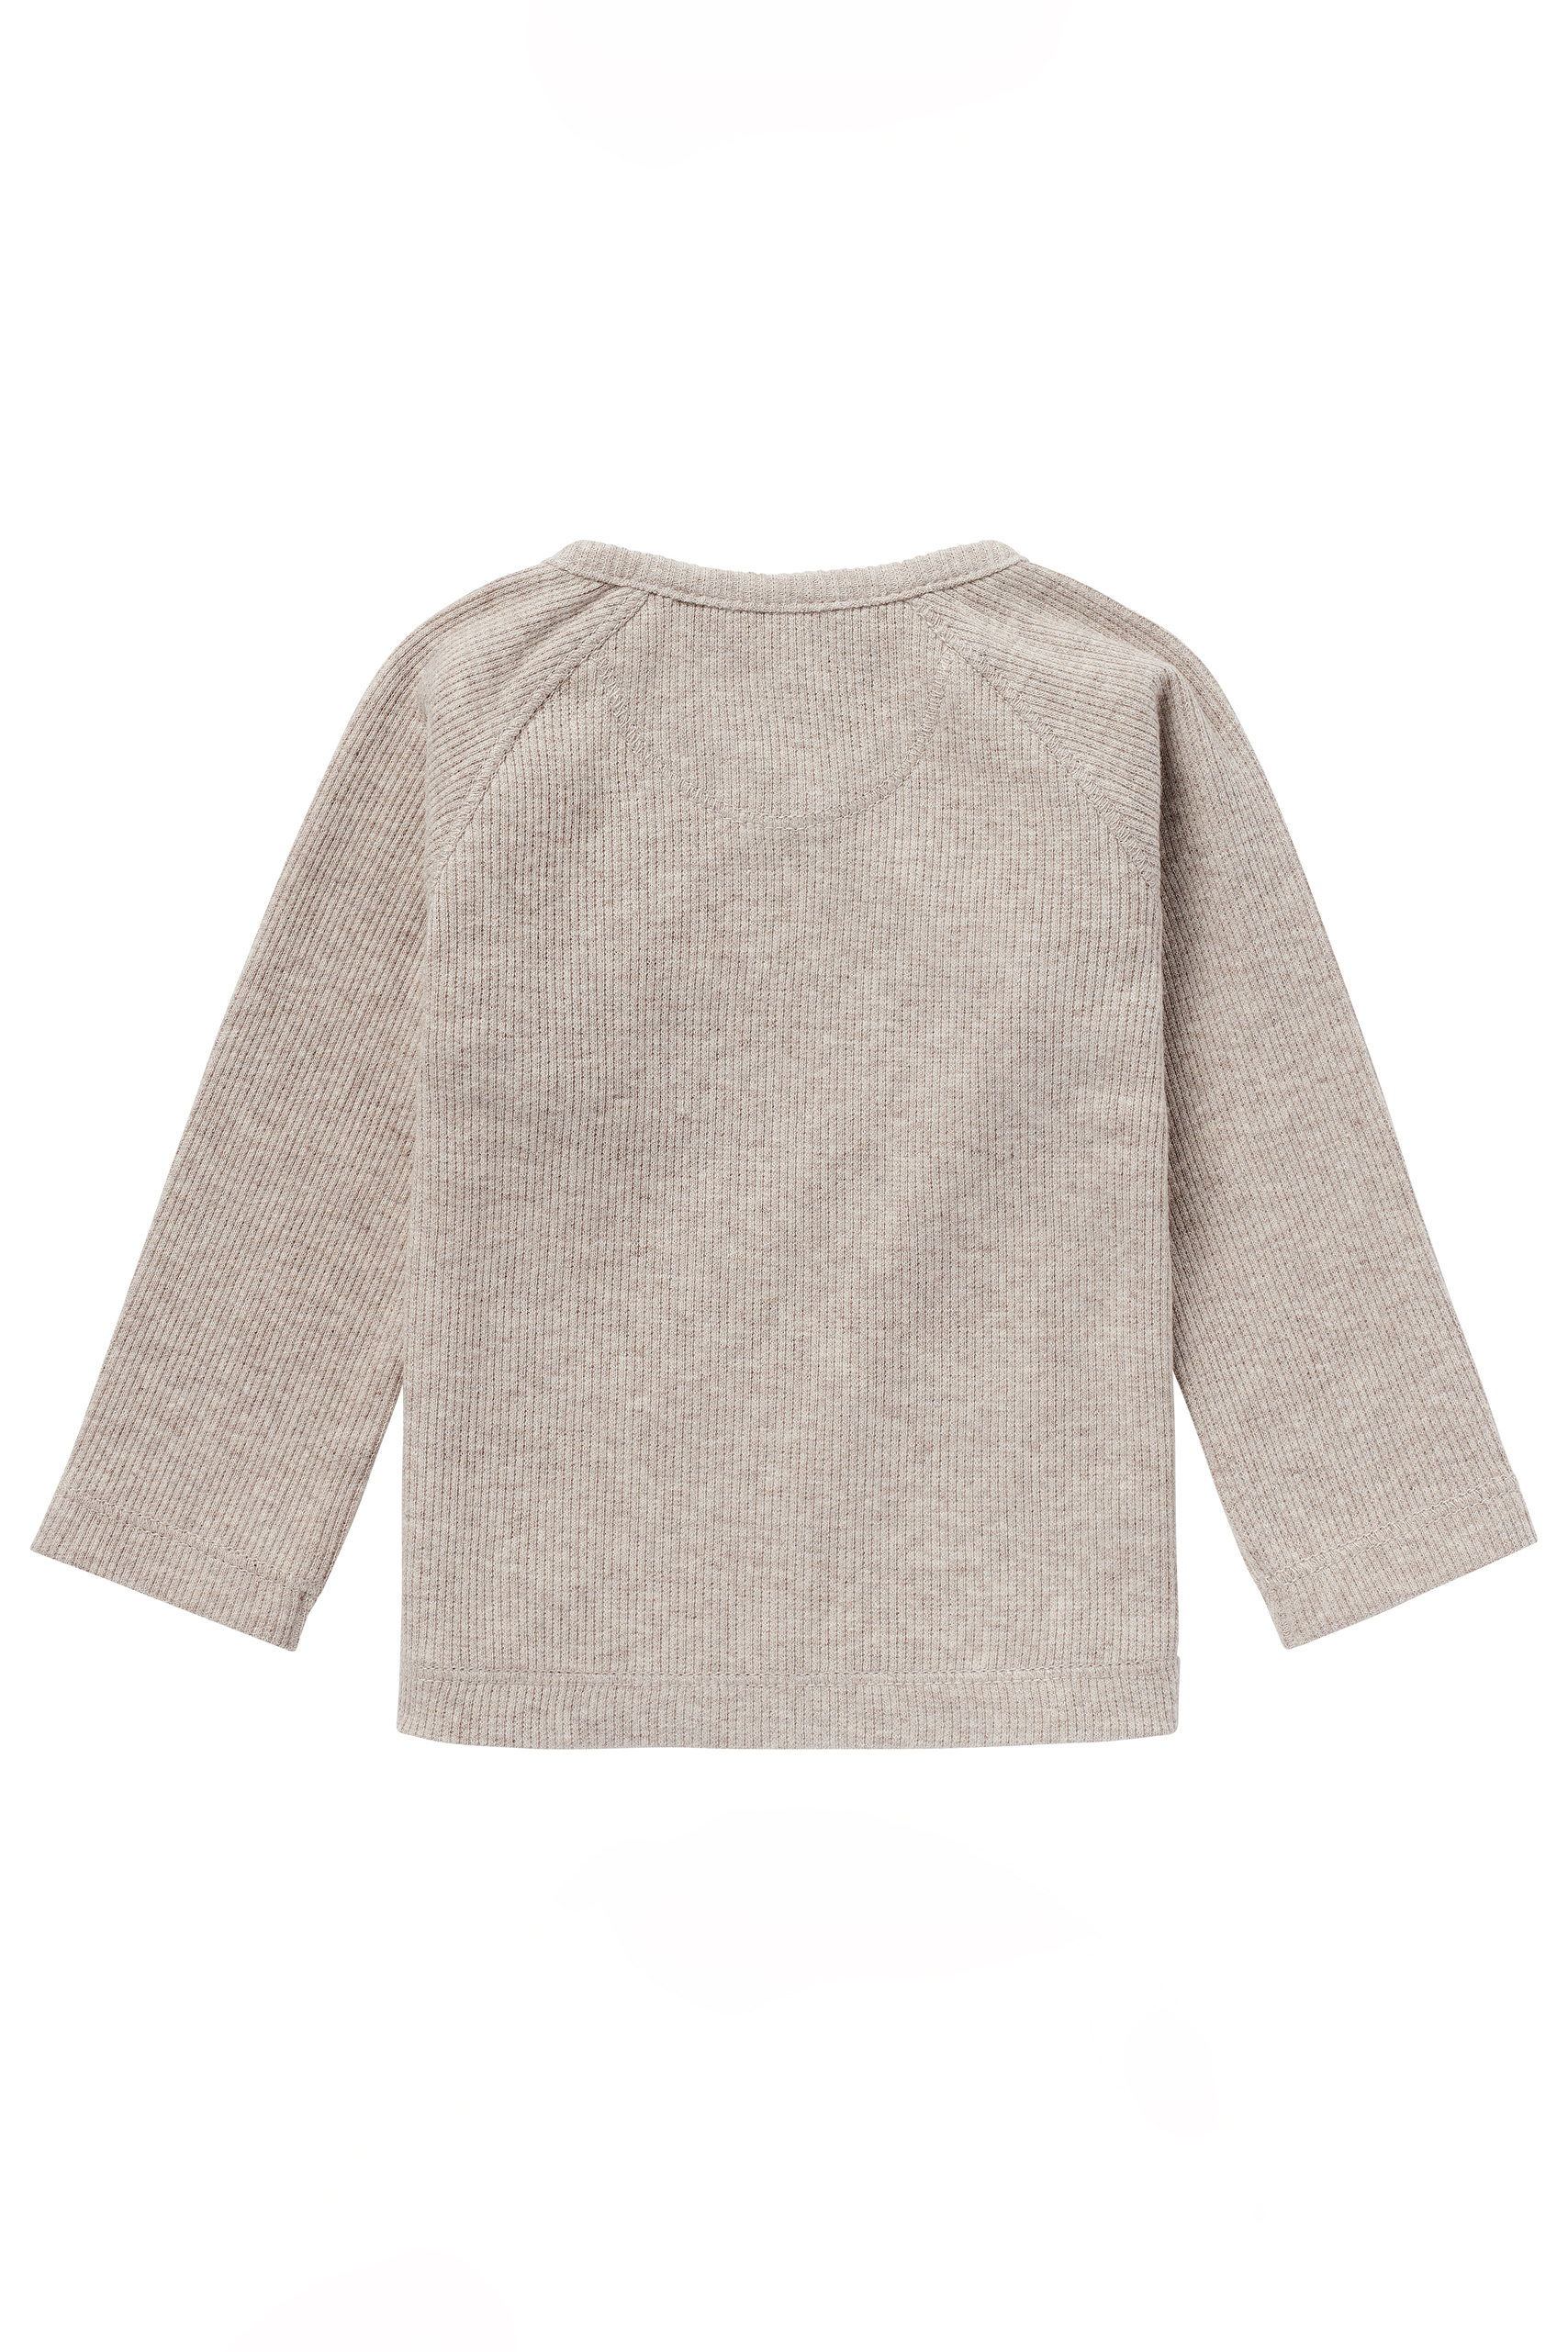 Baby Wrap Shirt taupe order online | Mamarella